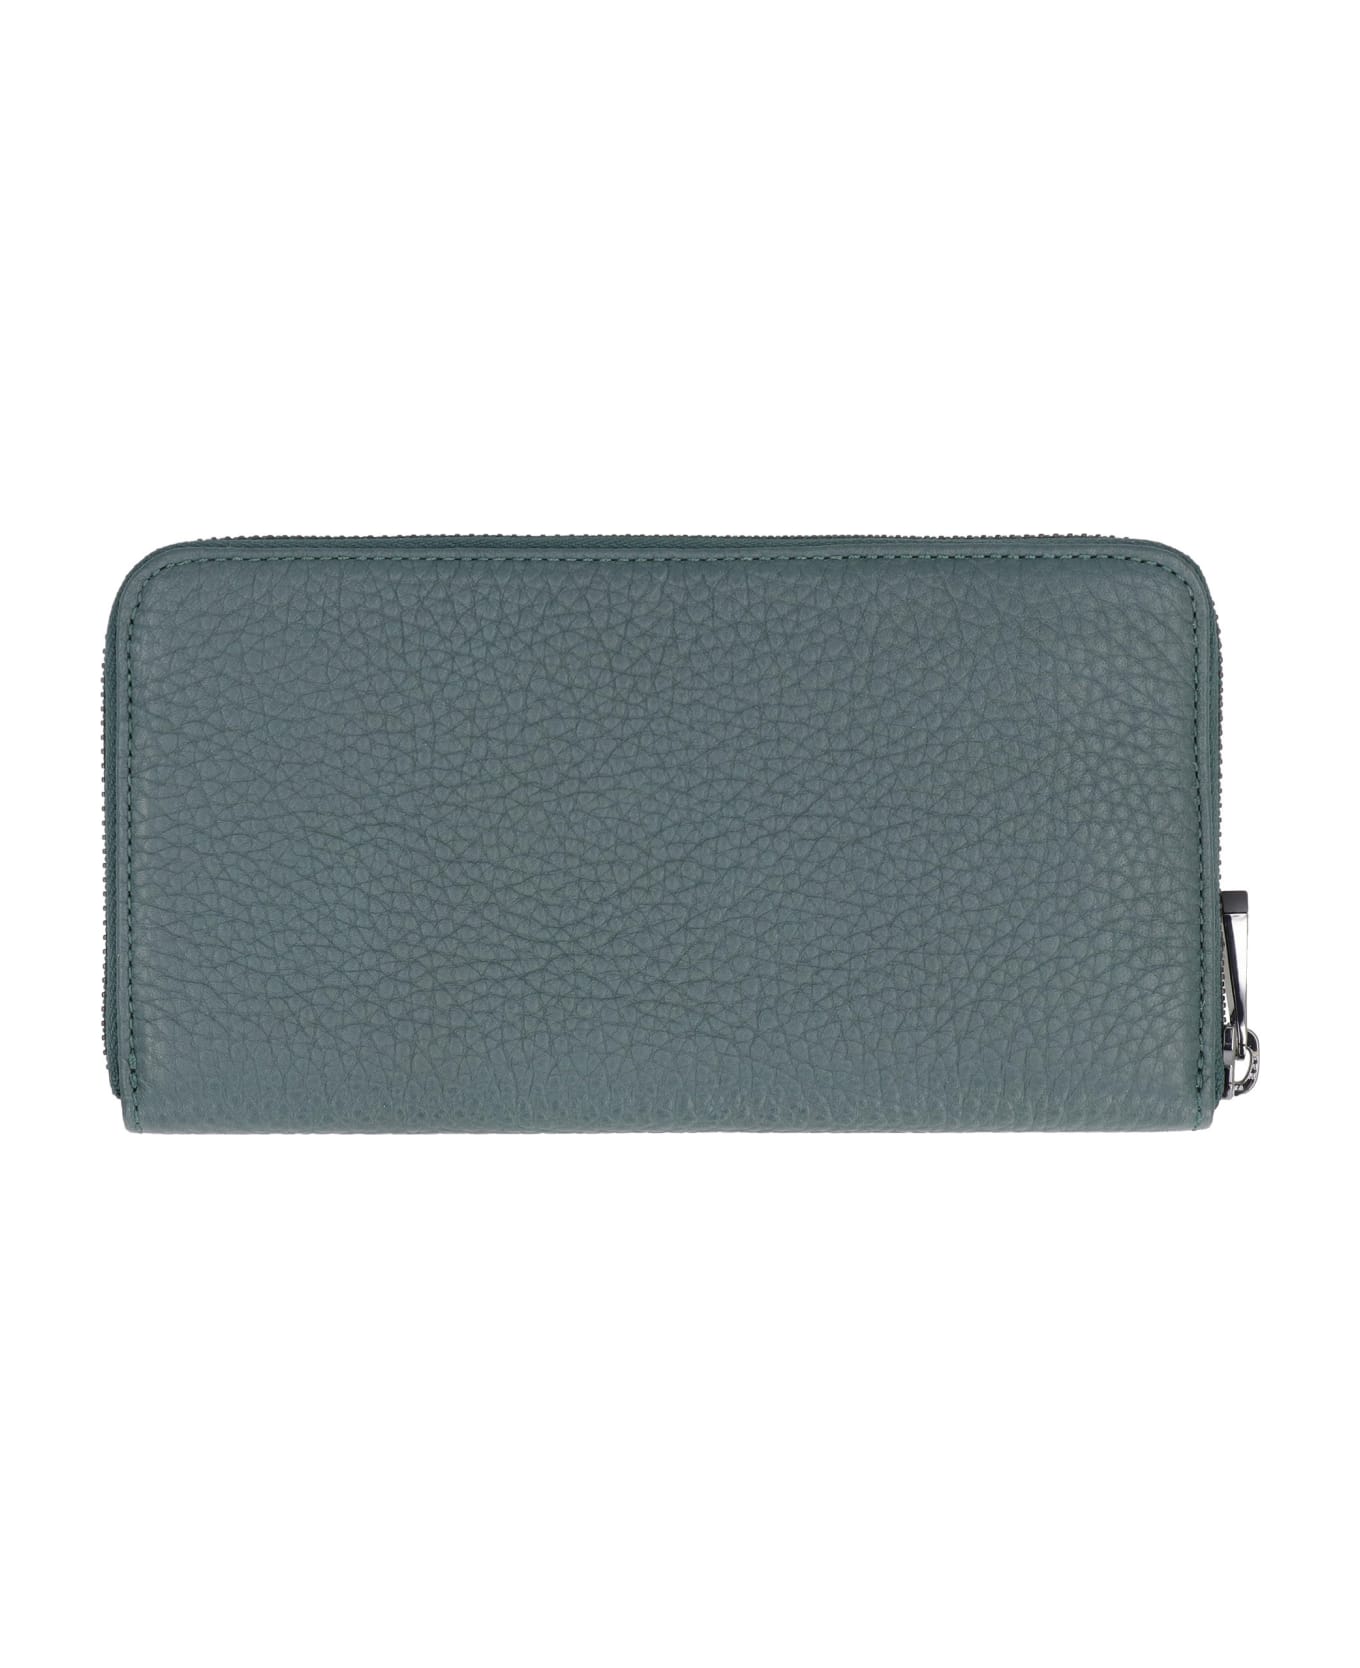 Emporio Armani Leather Zip Around Wallet - green